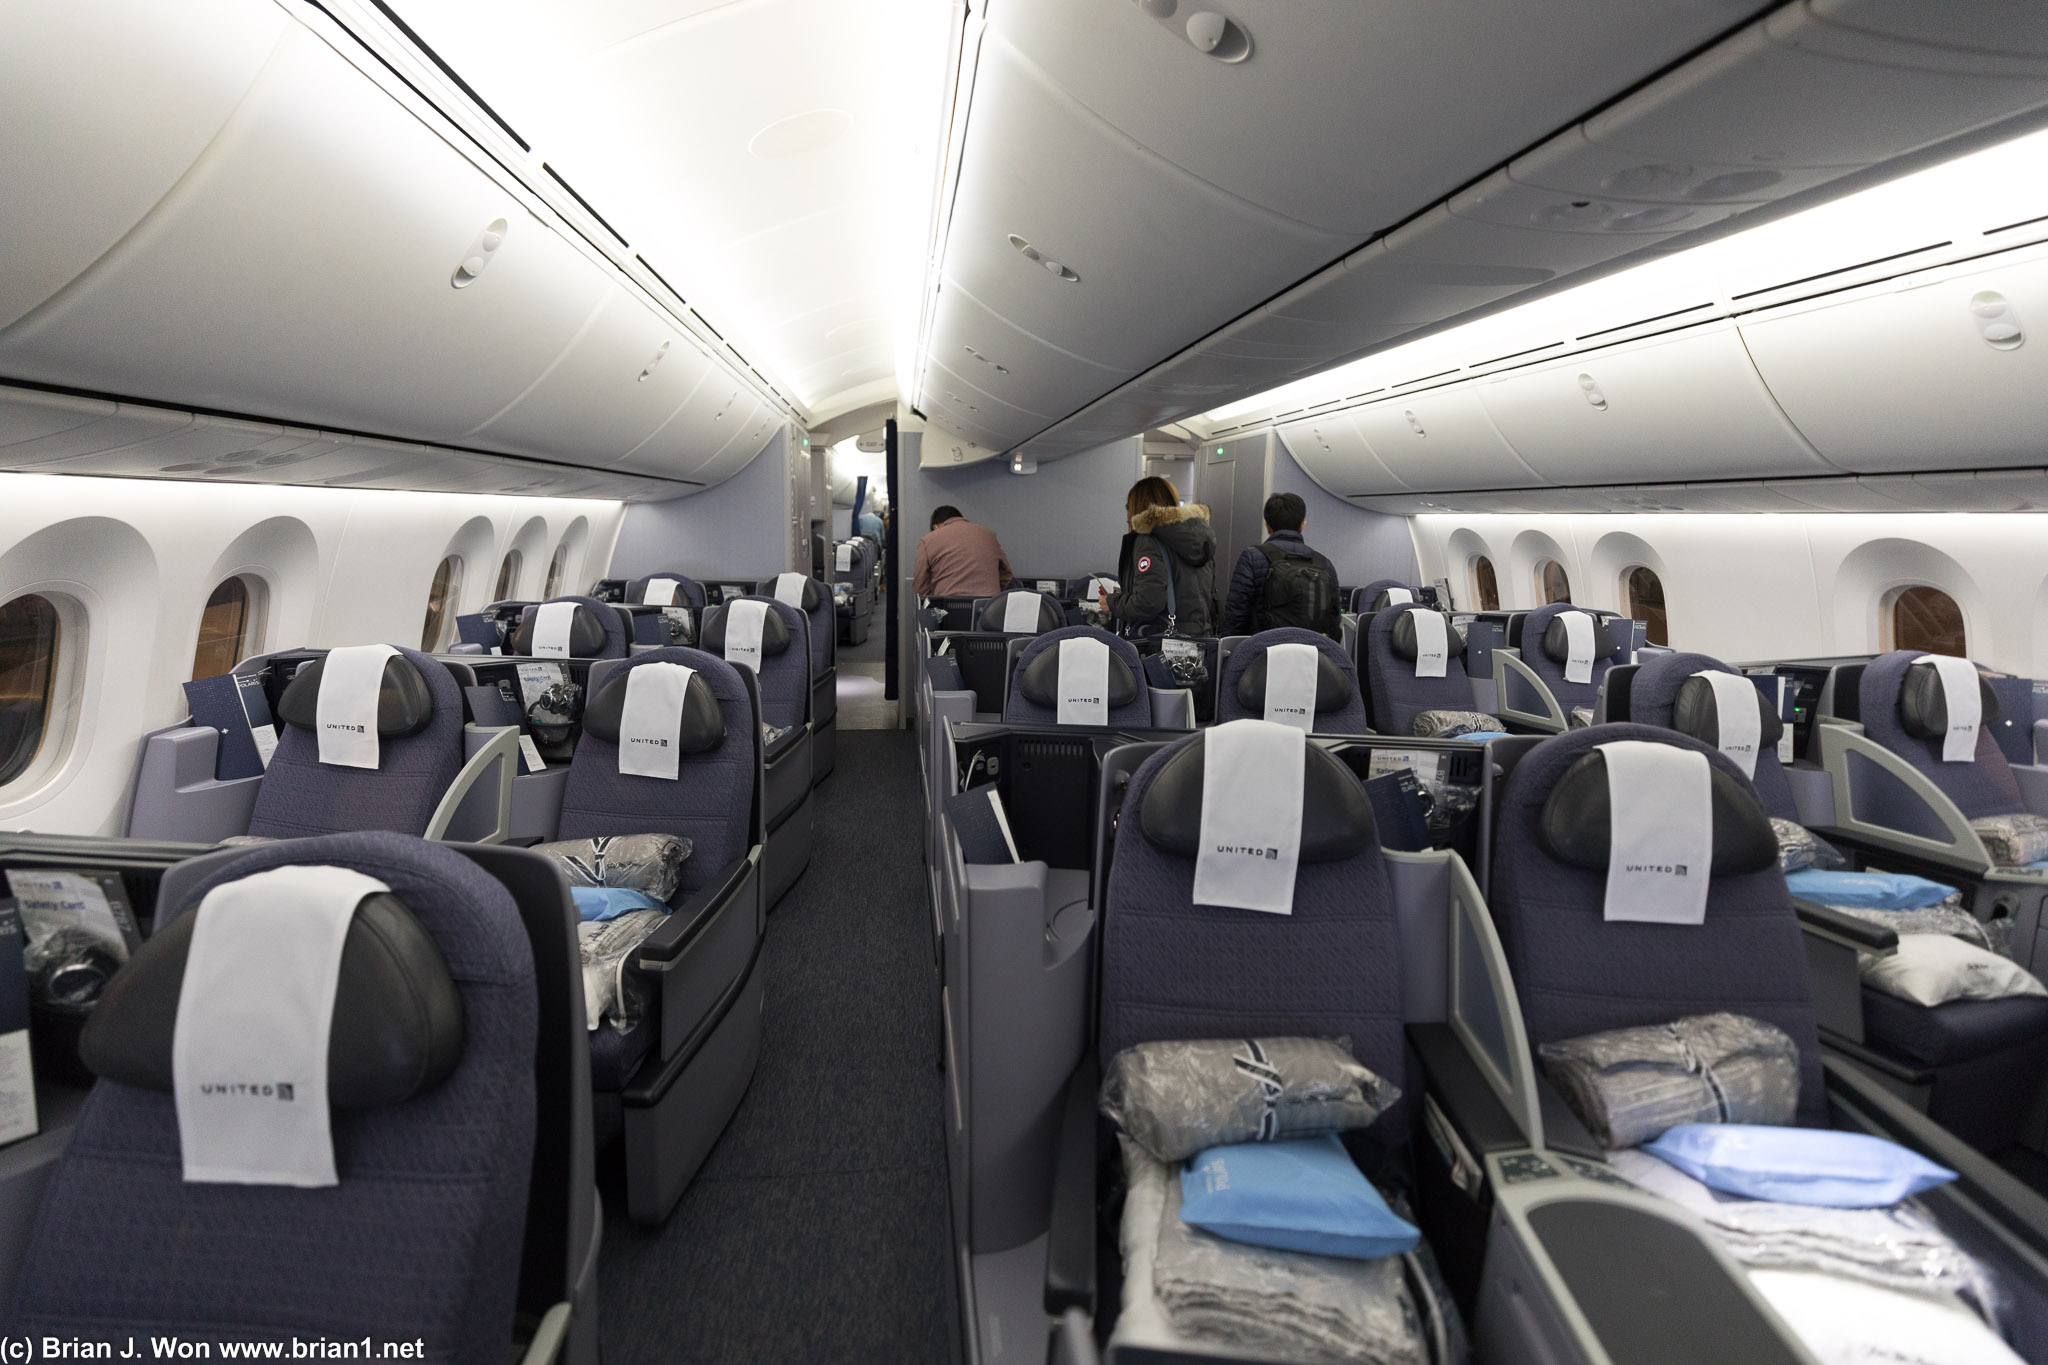 B/E Aerospace Diamond seats, aka the old Continental business class seat.